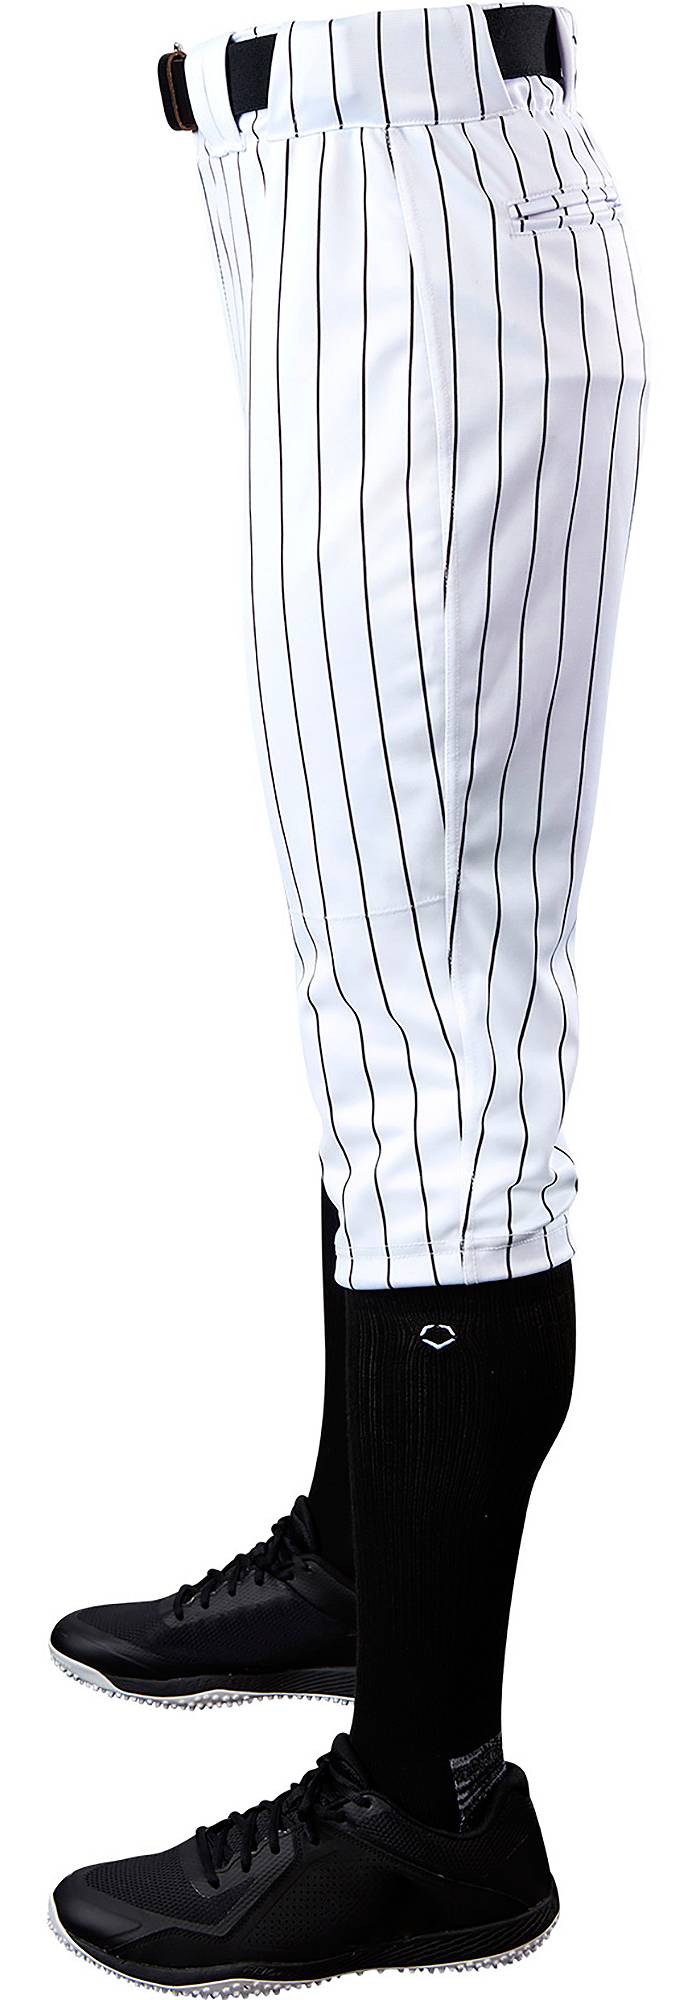 Knicker Knee High Game-Practice-Pinstripe-Navy Blue-Baseball Pants